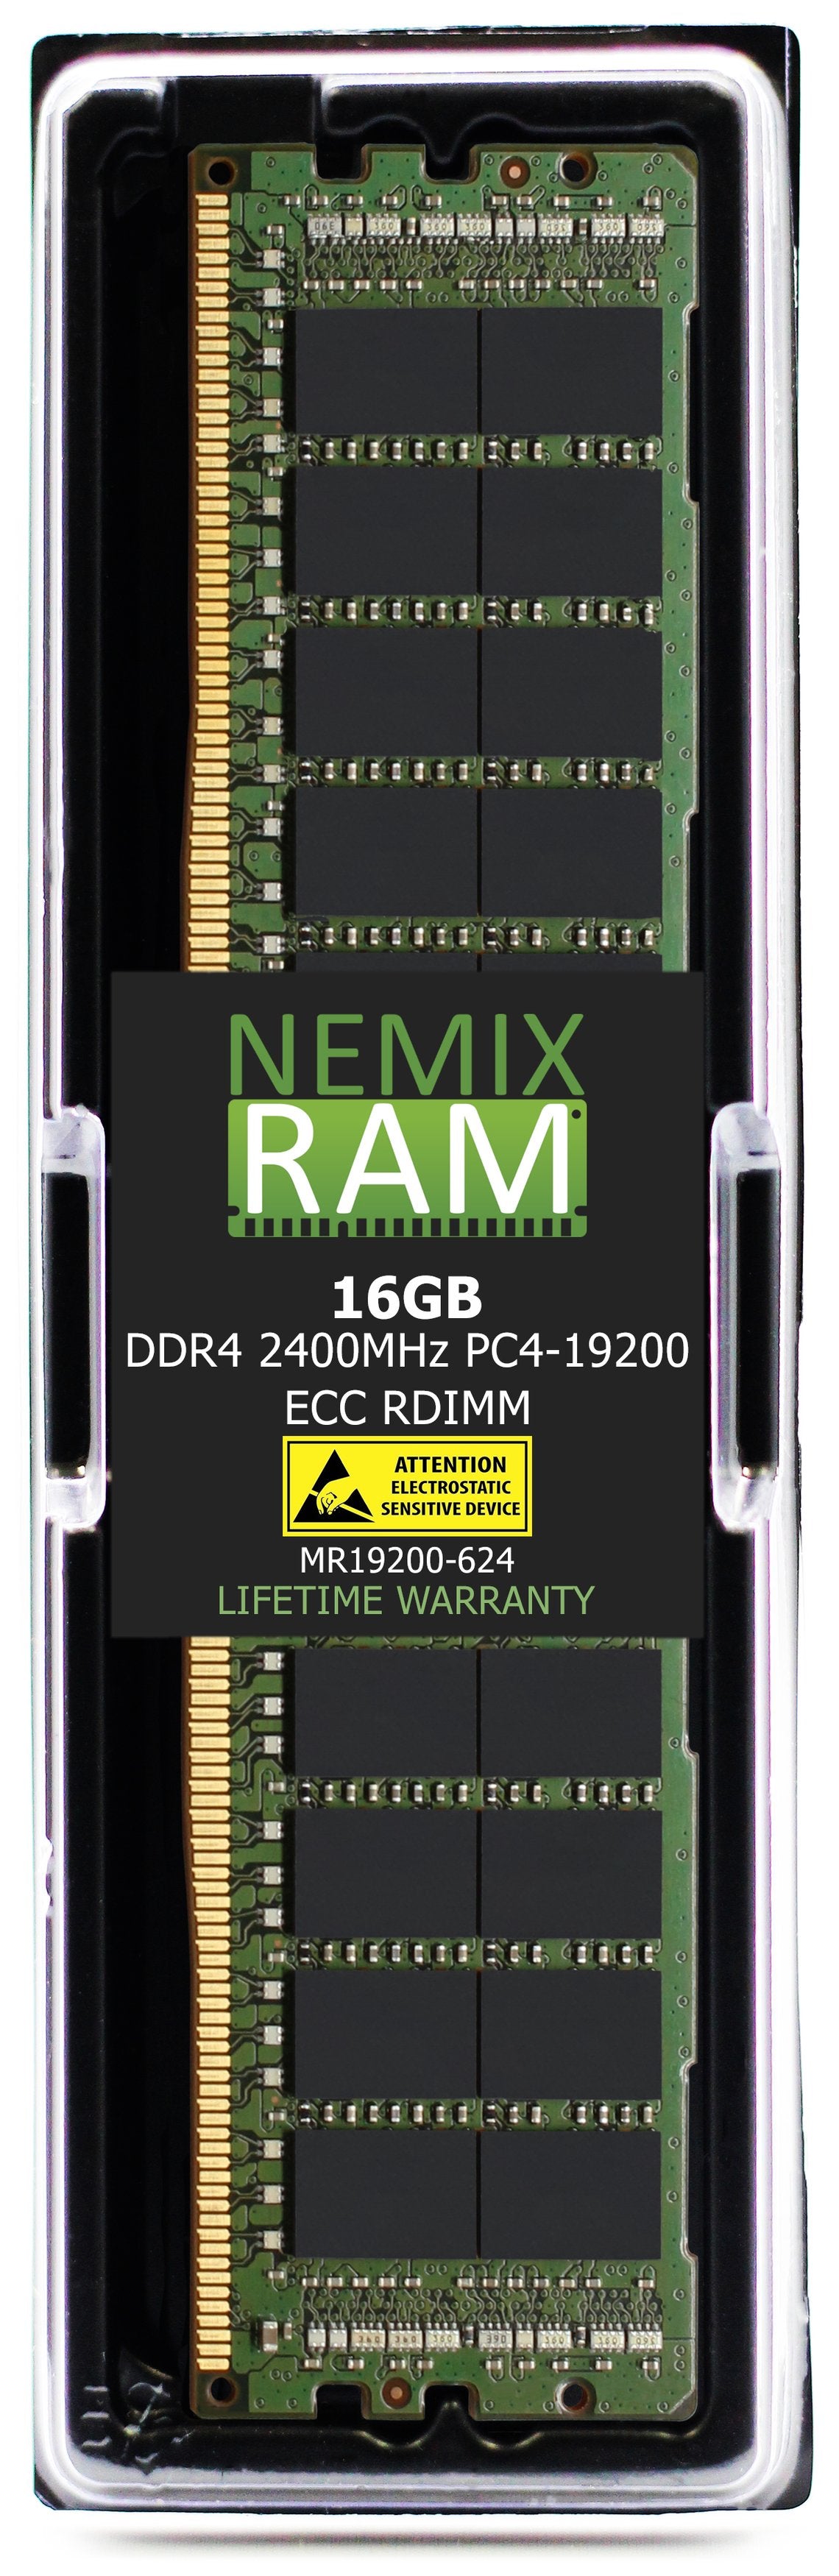 Hynix HMA42GR7BJR4N-UH 16GB DDR4 2400MHZ PC4-19200 RDIMM Compatible Memory Module